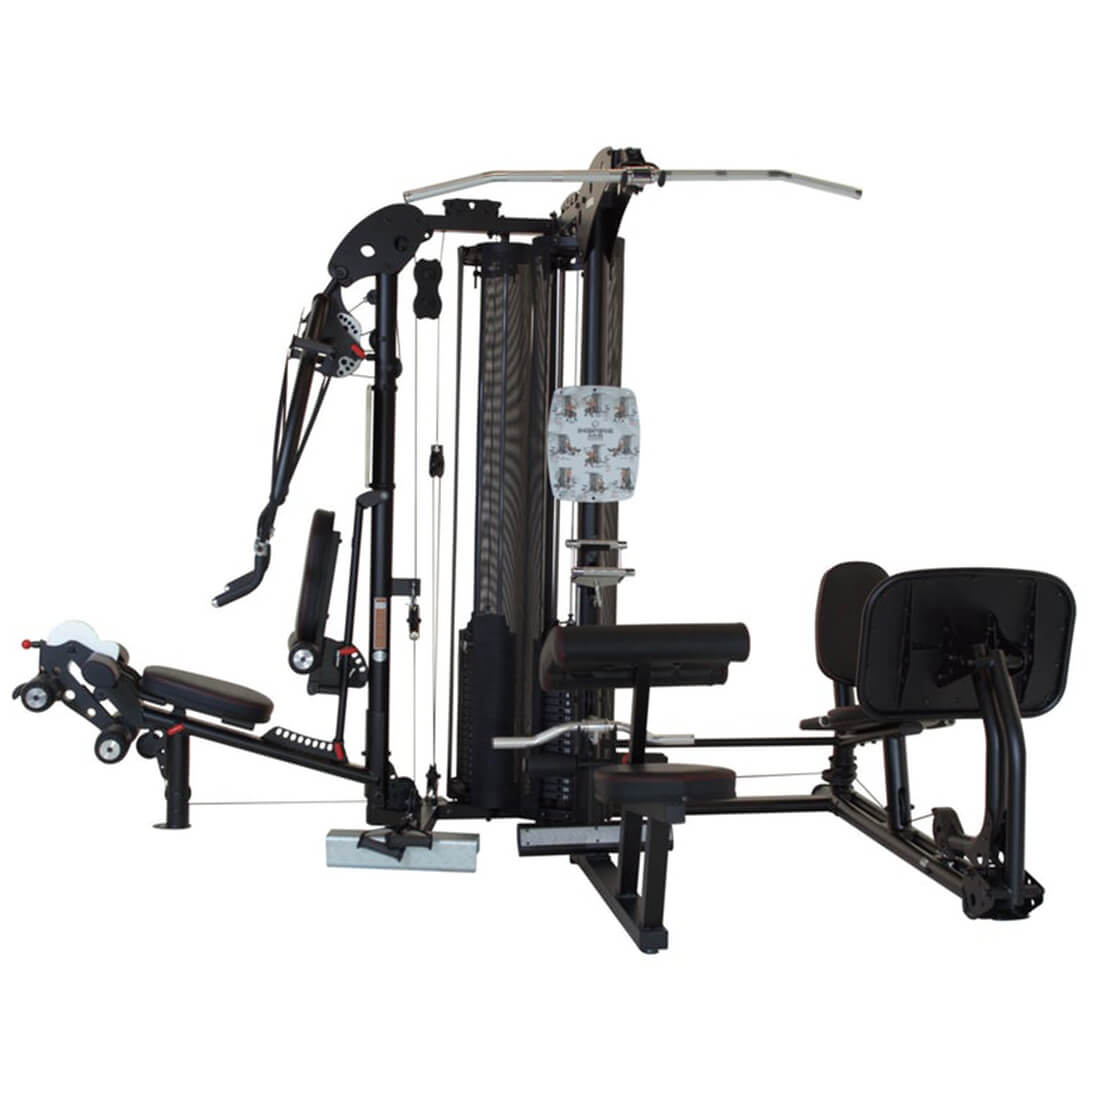 Inspire Multi Gym M5 with leg press attachment